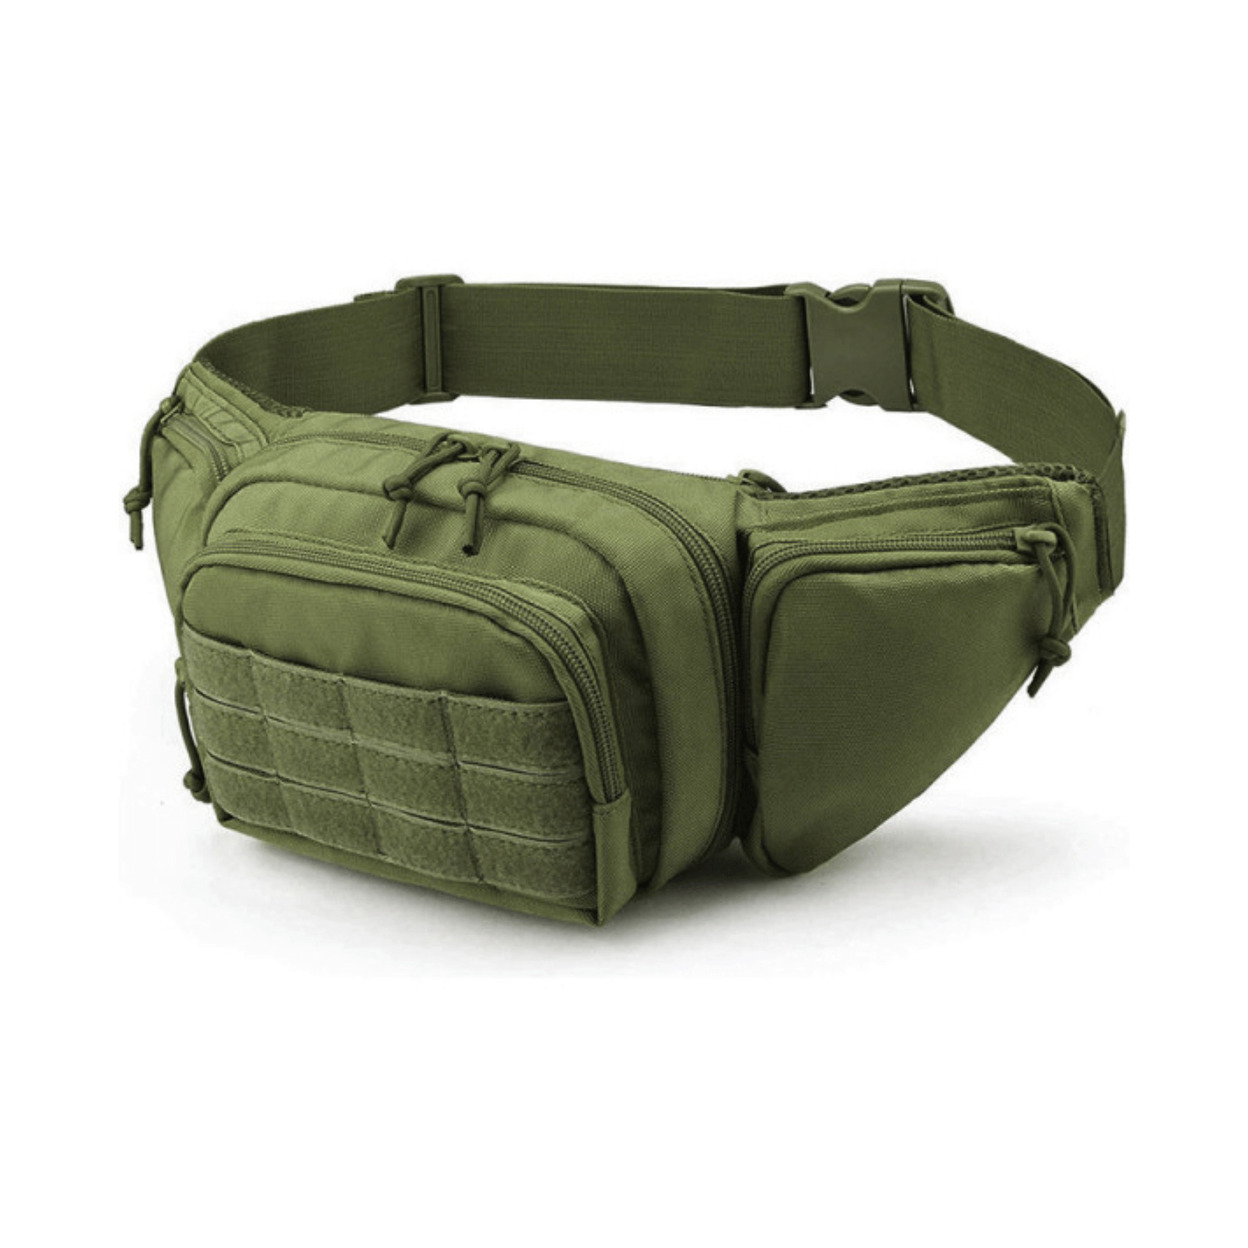 Tactical Waist Bag & MOLLE EDC Pouch For Outdoor Activities - Khaki